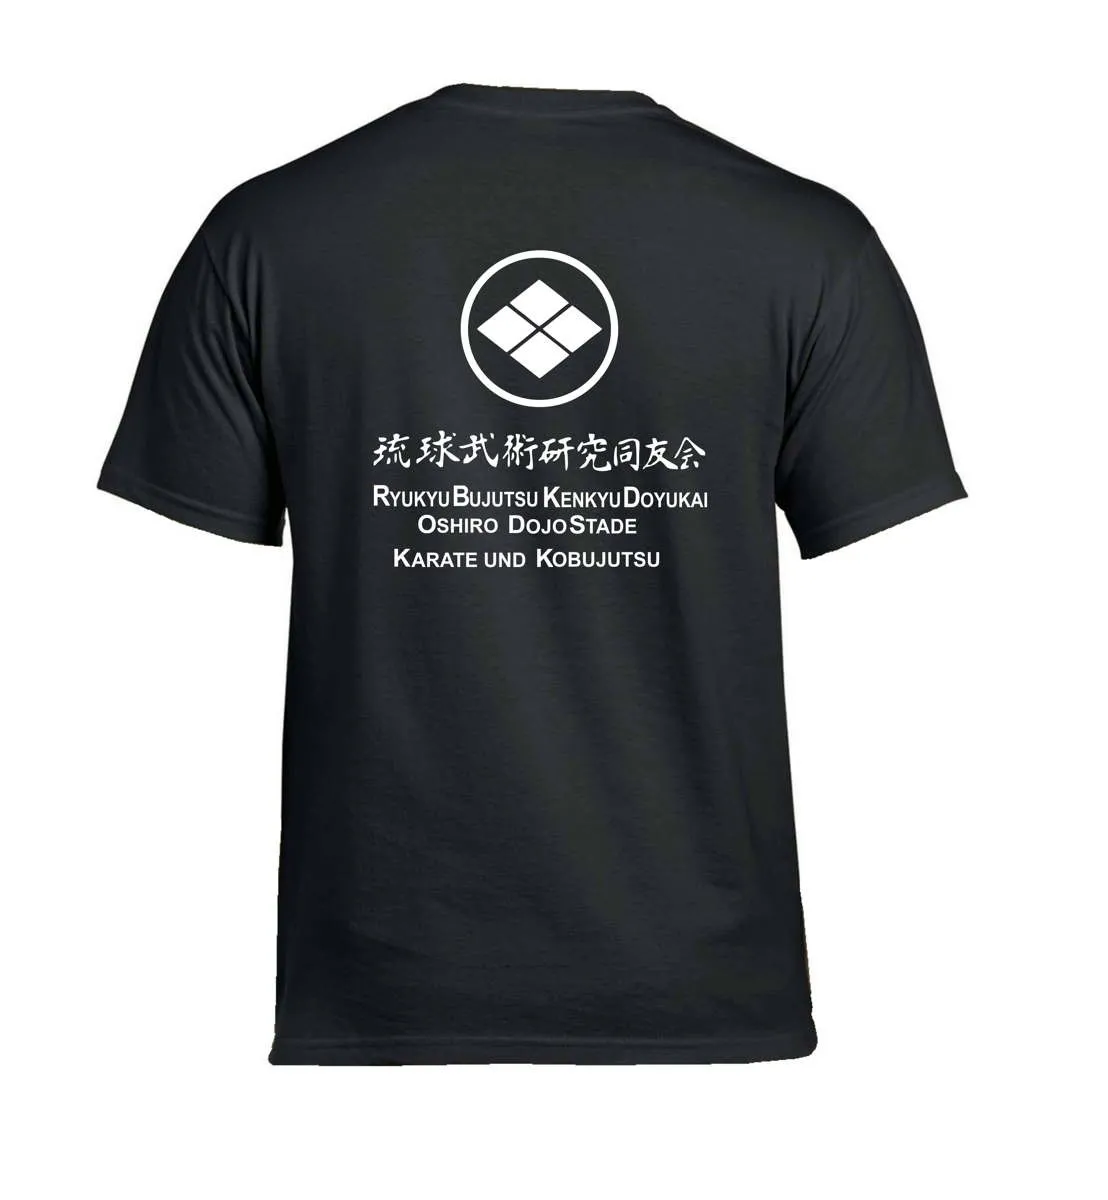 Camiseta Oshiro Dojo Stade negra